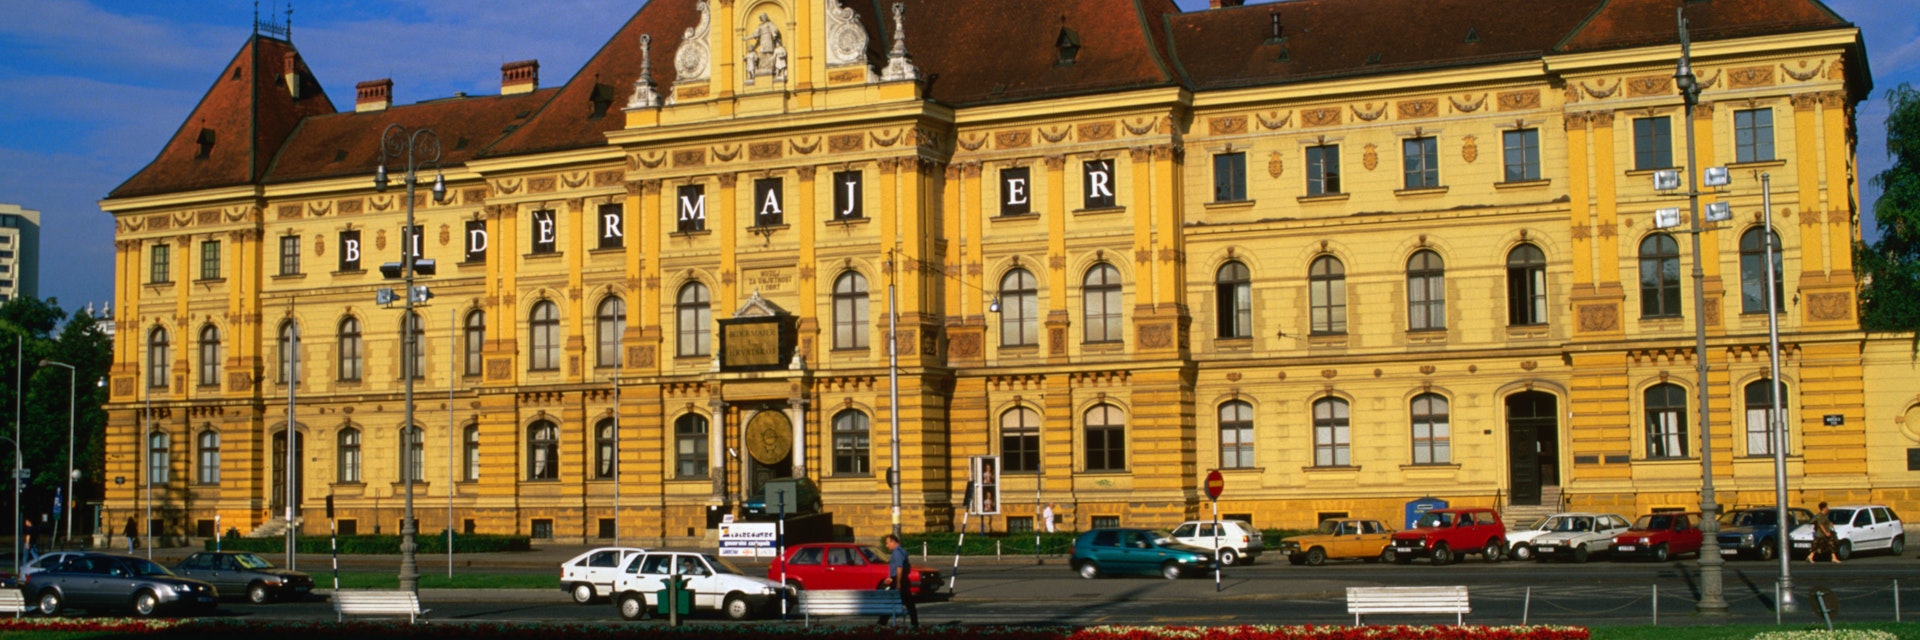 The facade of the historic Zagreb Art Museum, Croatia.